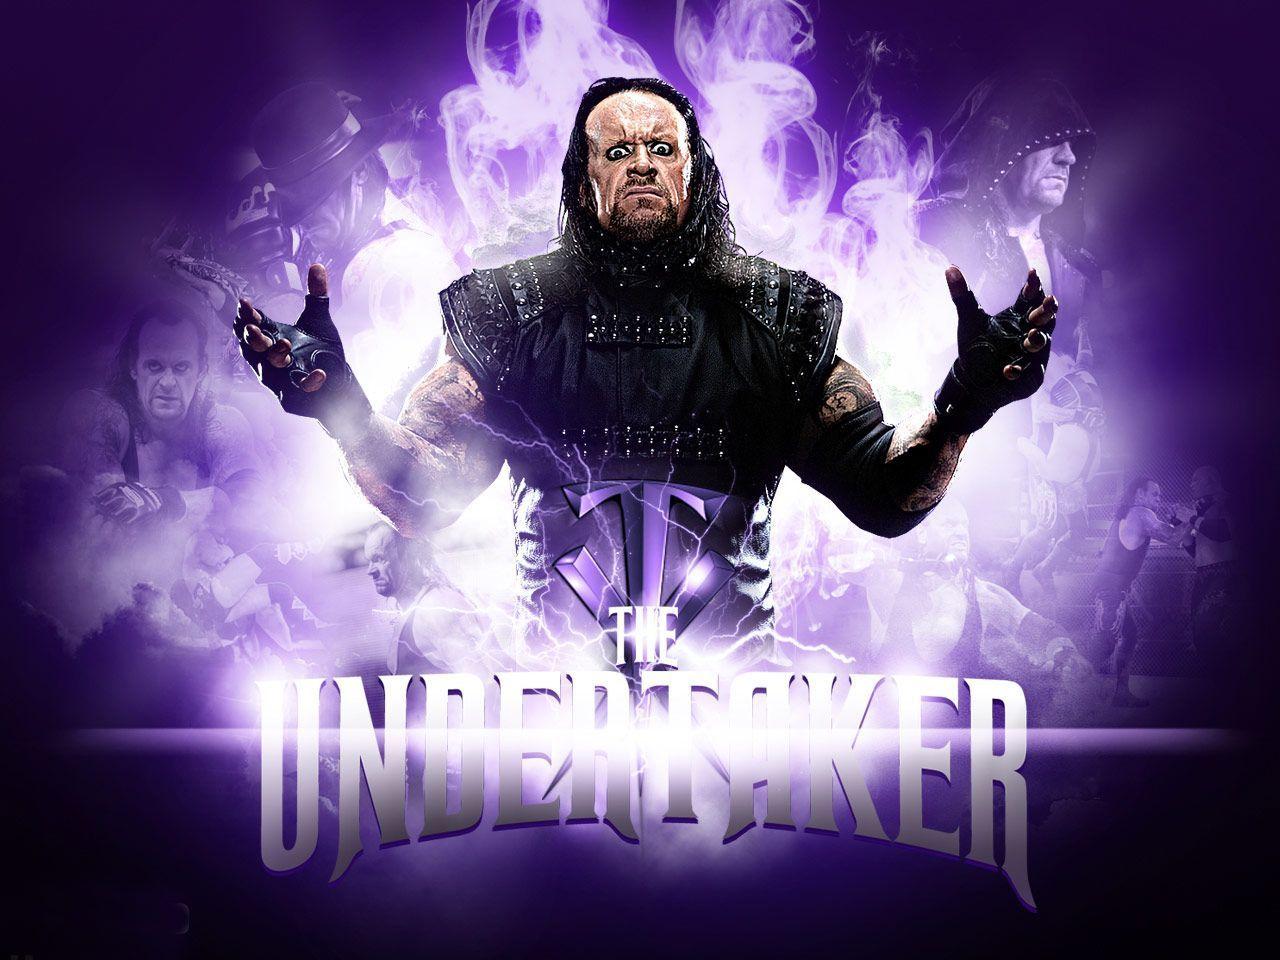 WWE WALLPAPERS: The Undertaker. Undertaker Wallpaper. WWE